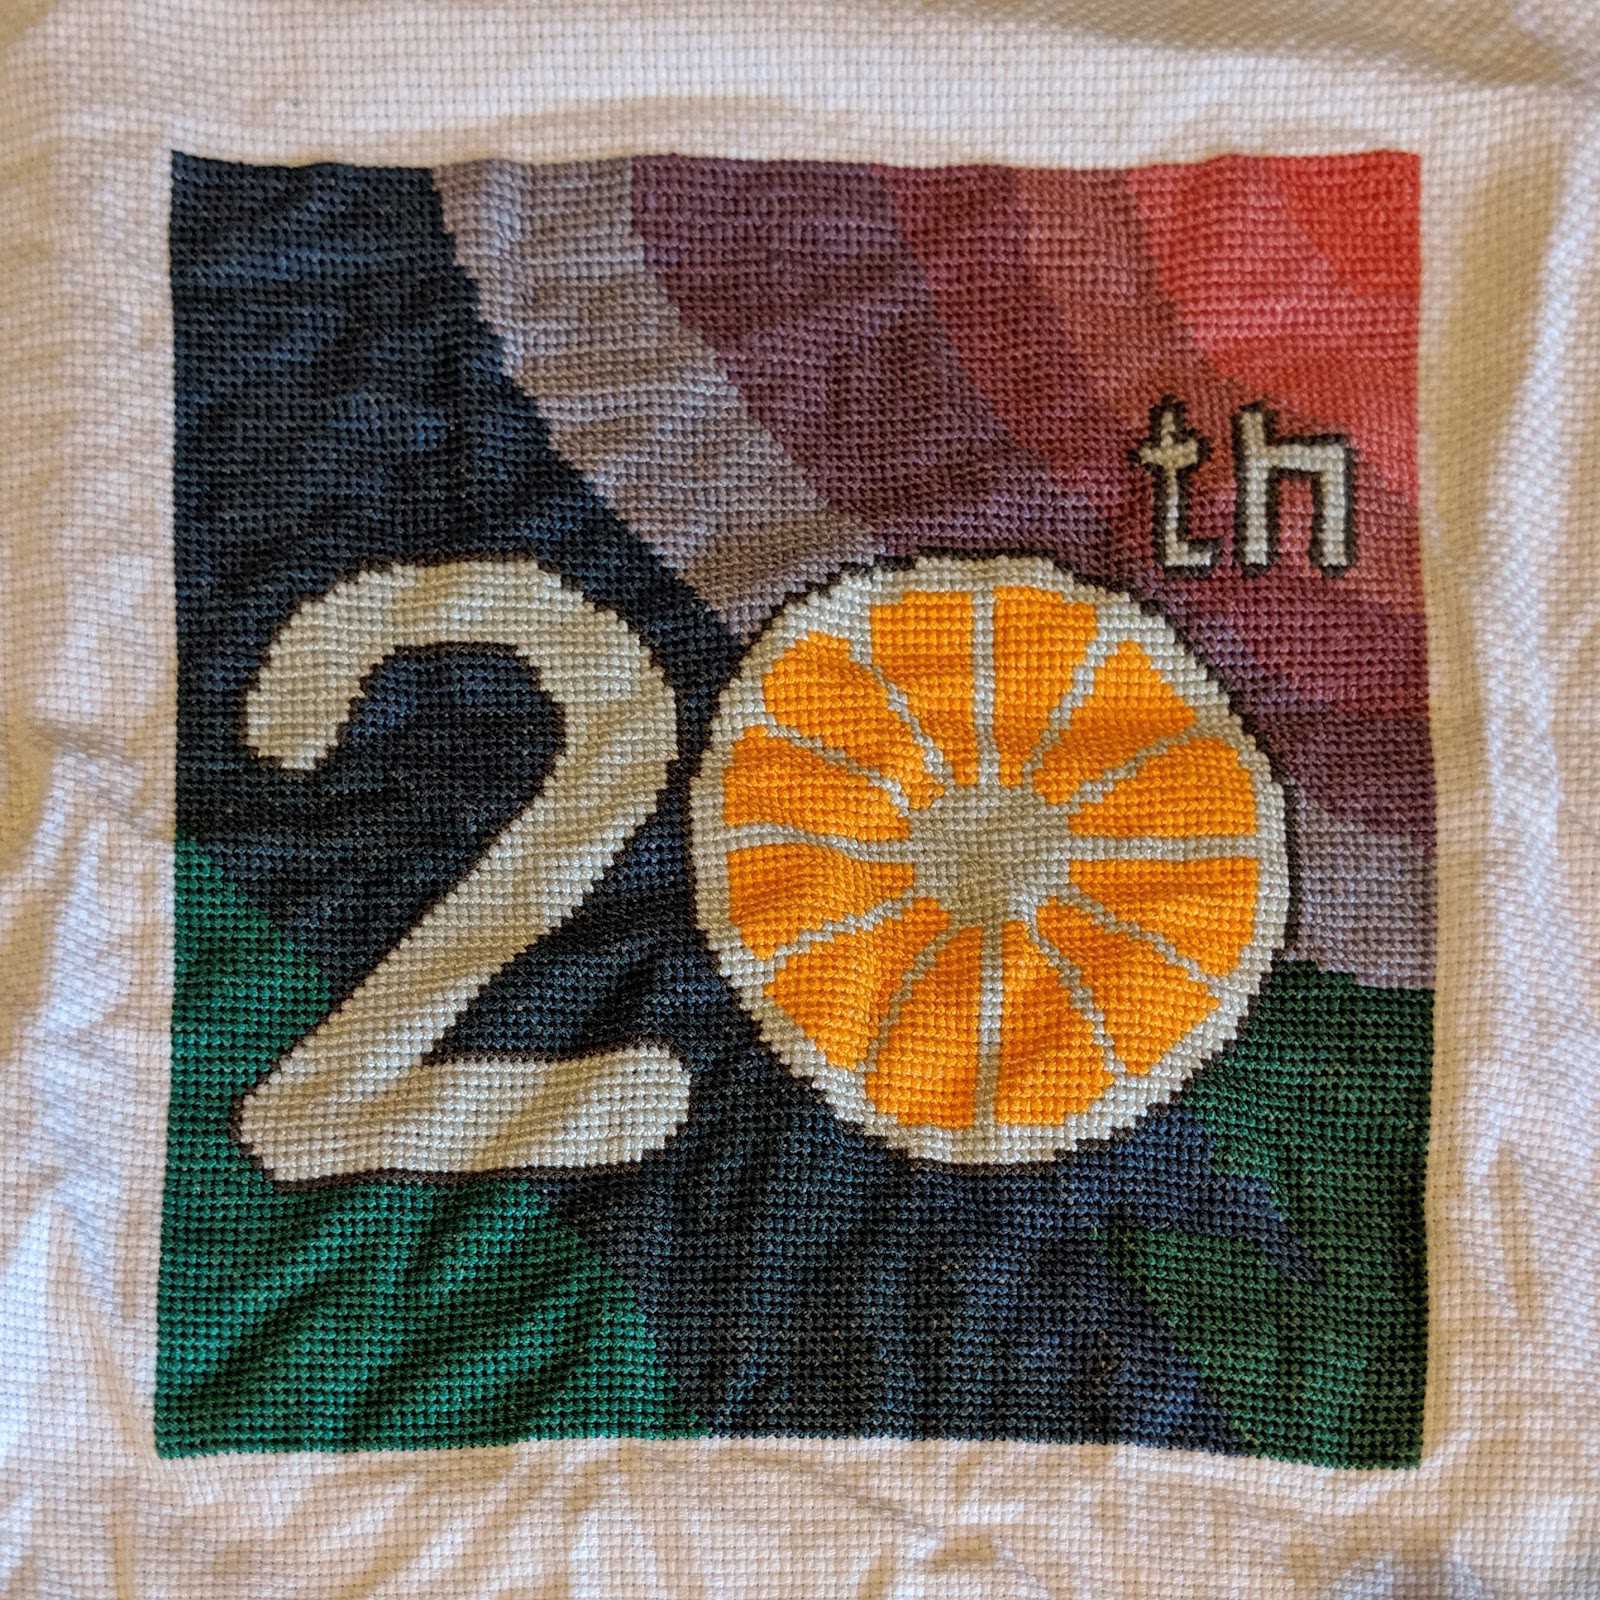 Cross-stitch reading '20th' with orange slice